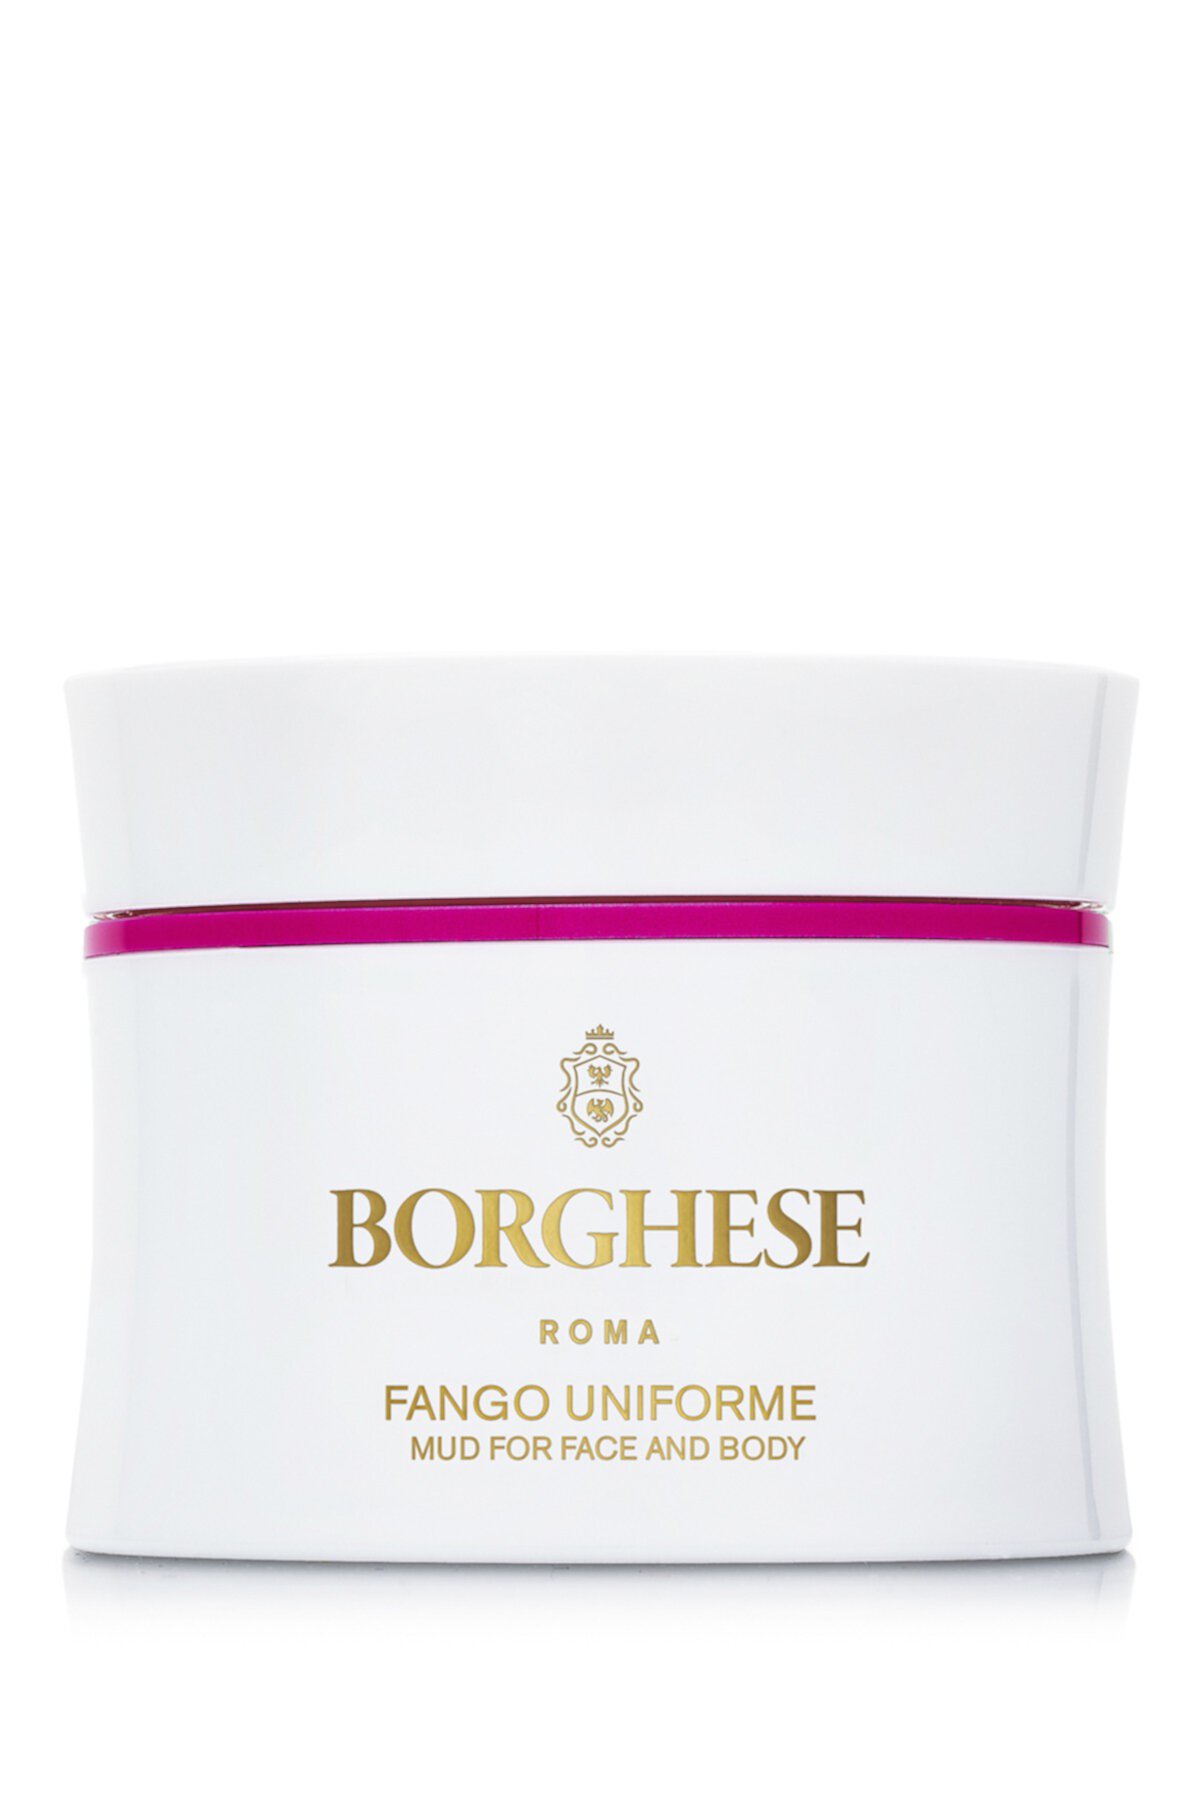 Осветляющая грязевая маска Fango Uniforme - 2.7 унций. Borghese